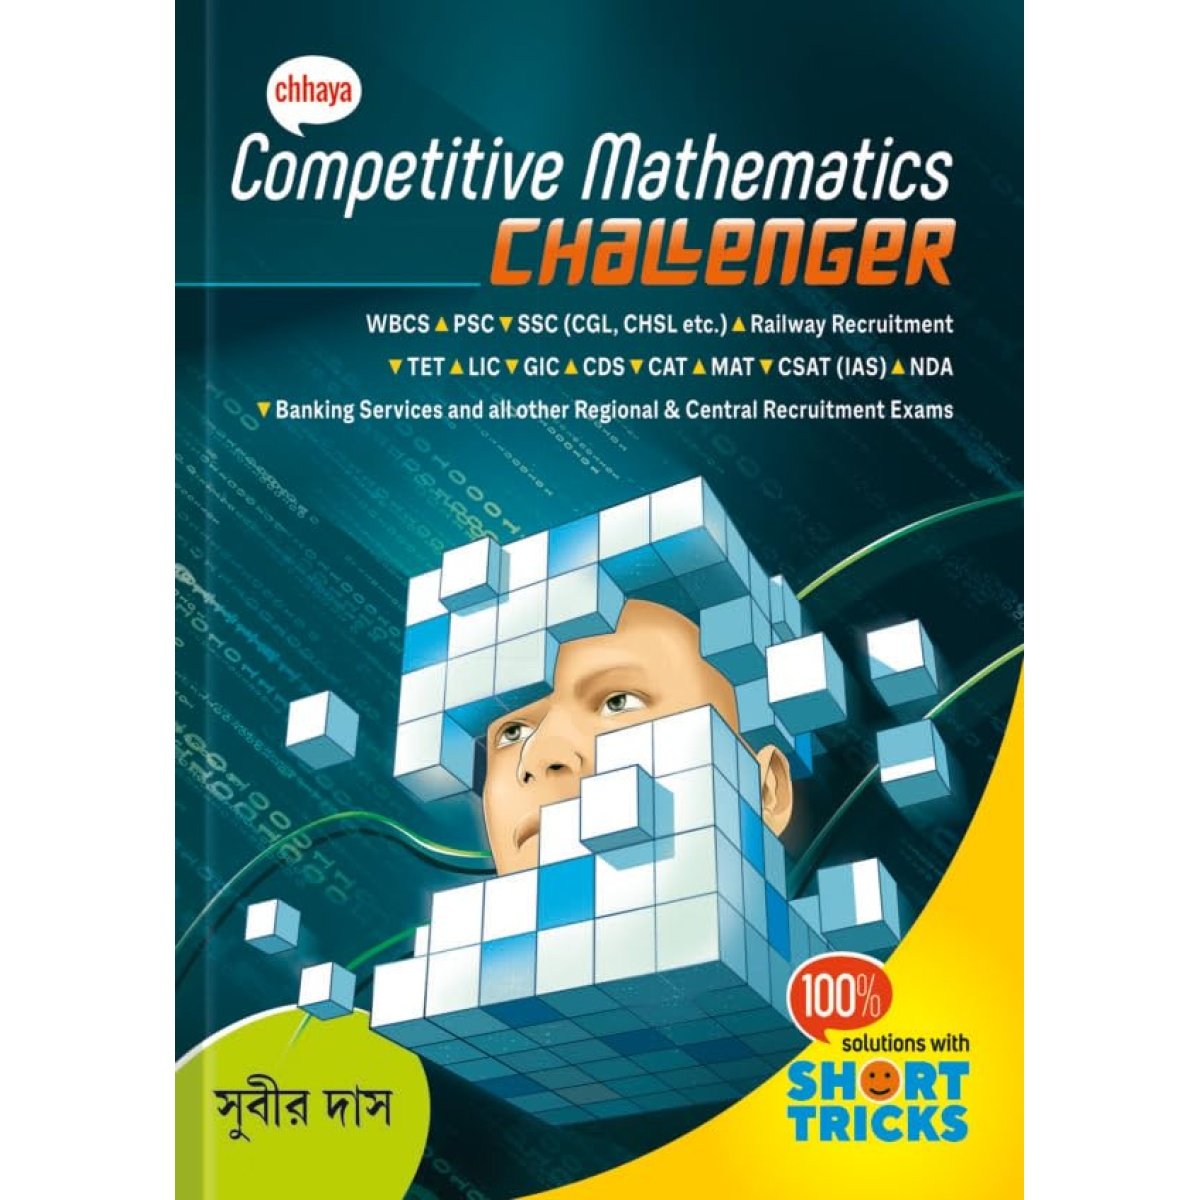 Competitive Mathematics Challenger (Bengali Version)